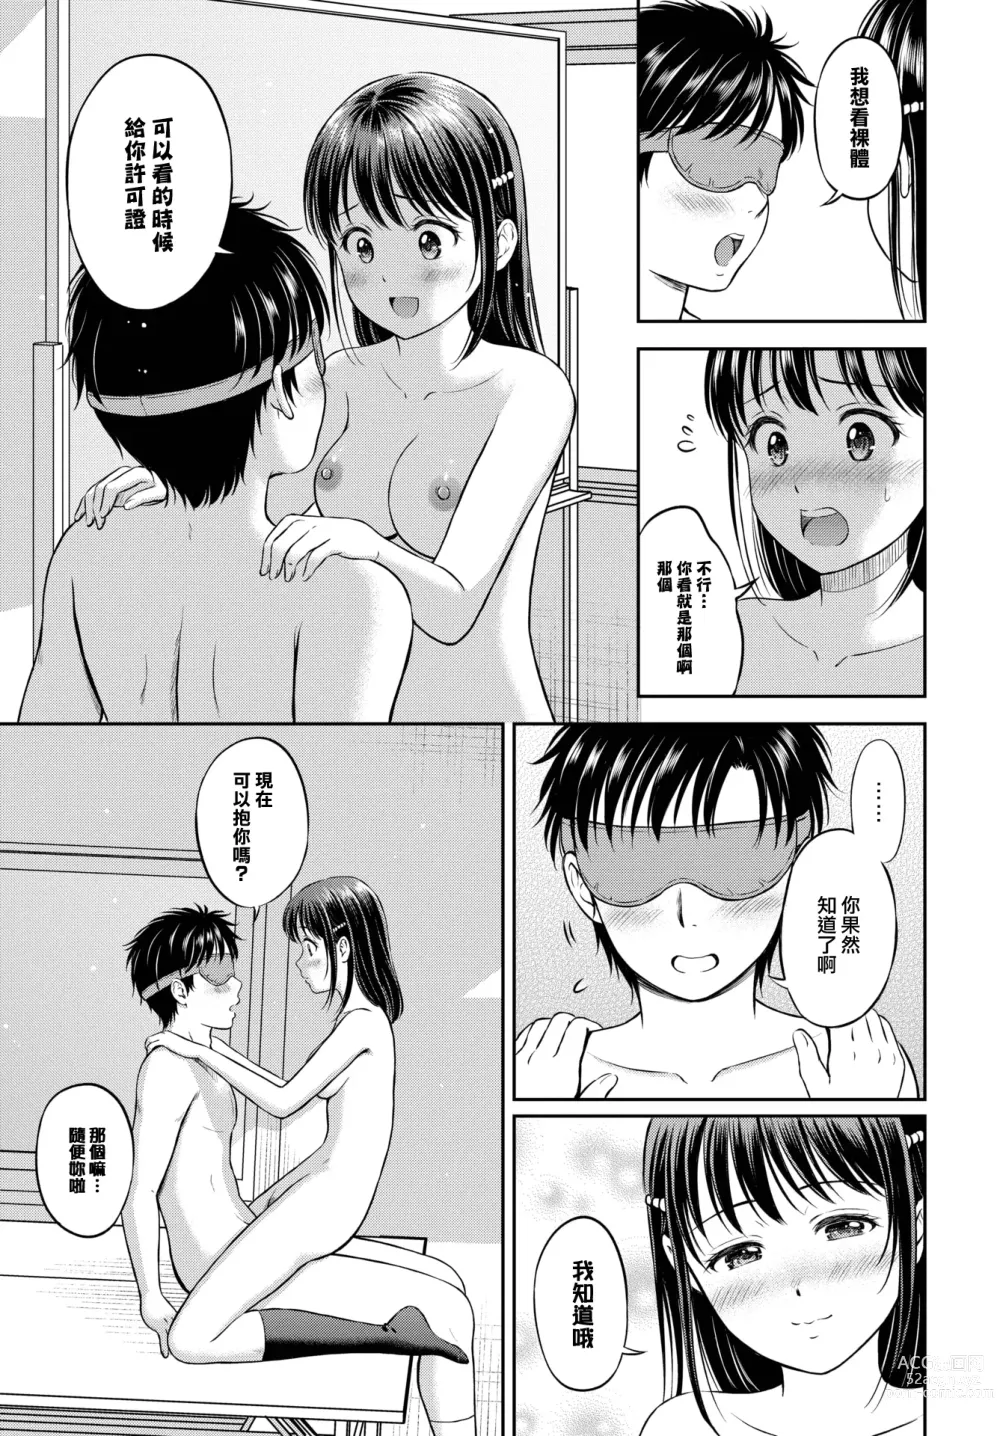 Page 32 of manga Kawari ni Narimasu - Im going to take her place. -Kouhen-